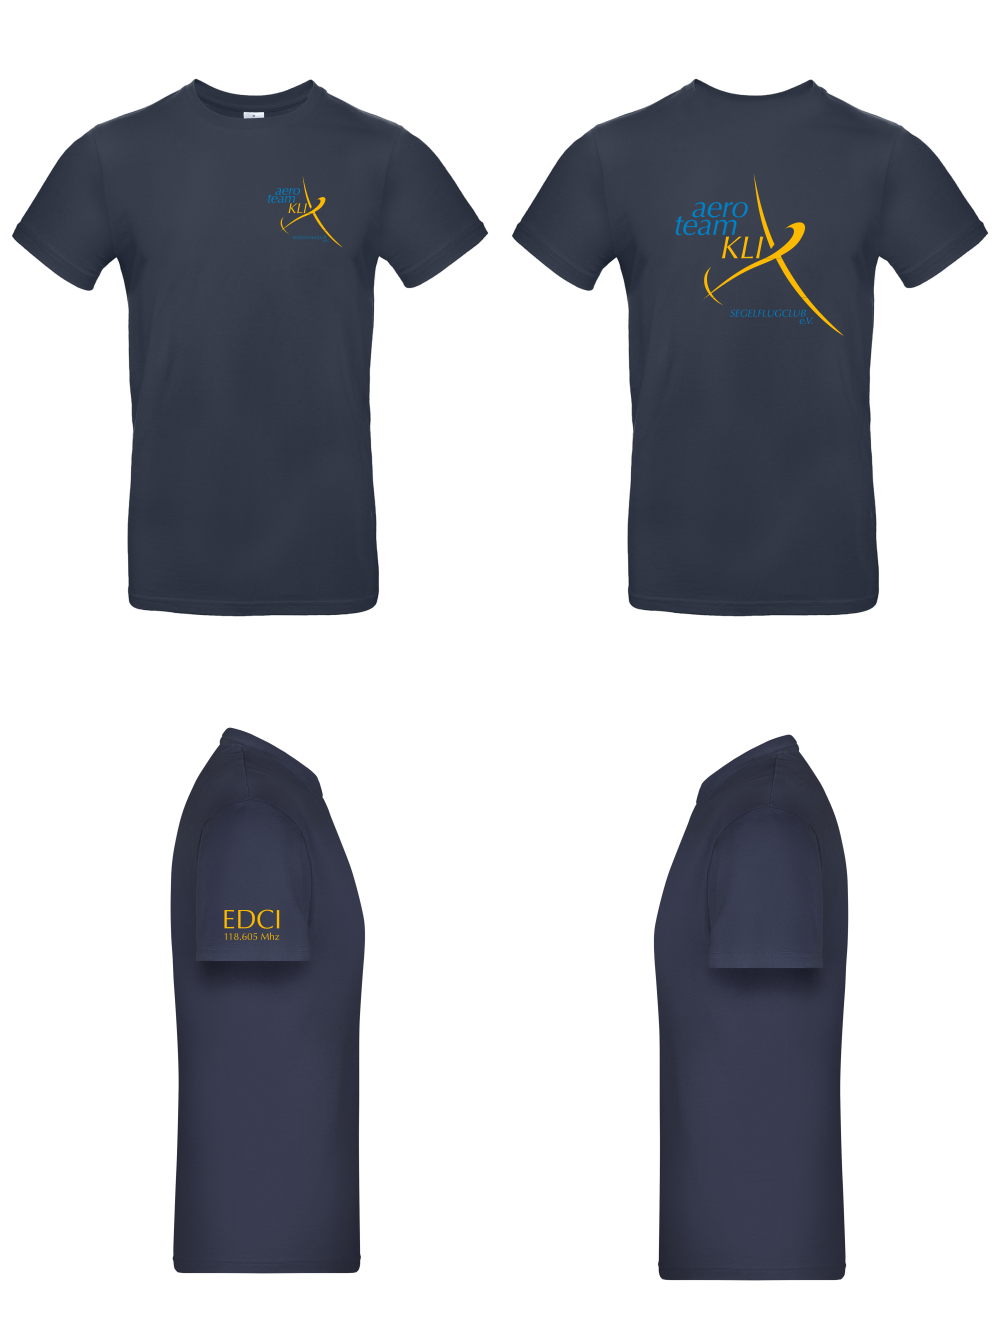 Herren T-Shirt Aeroteam Klix